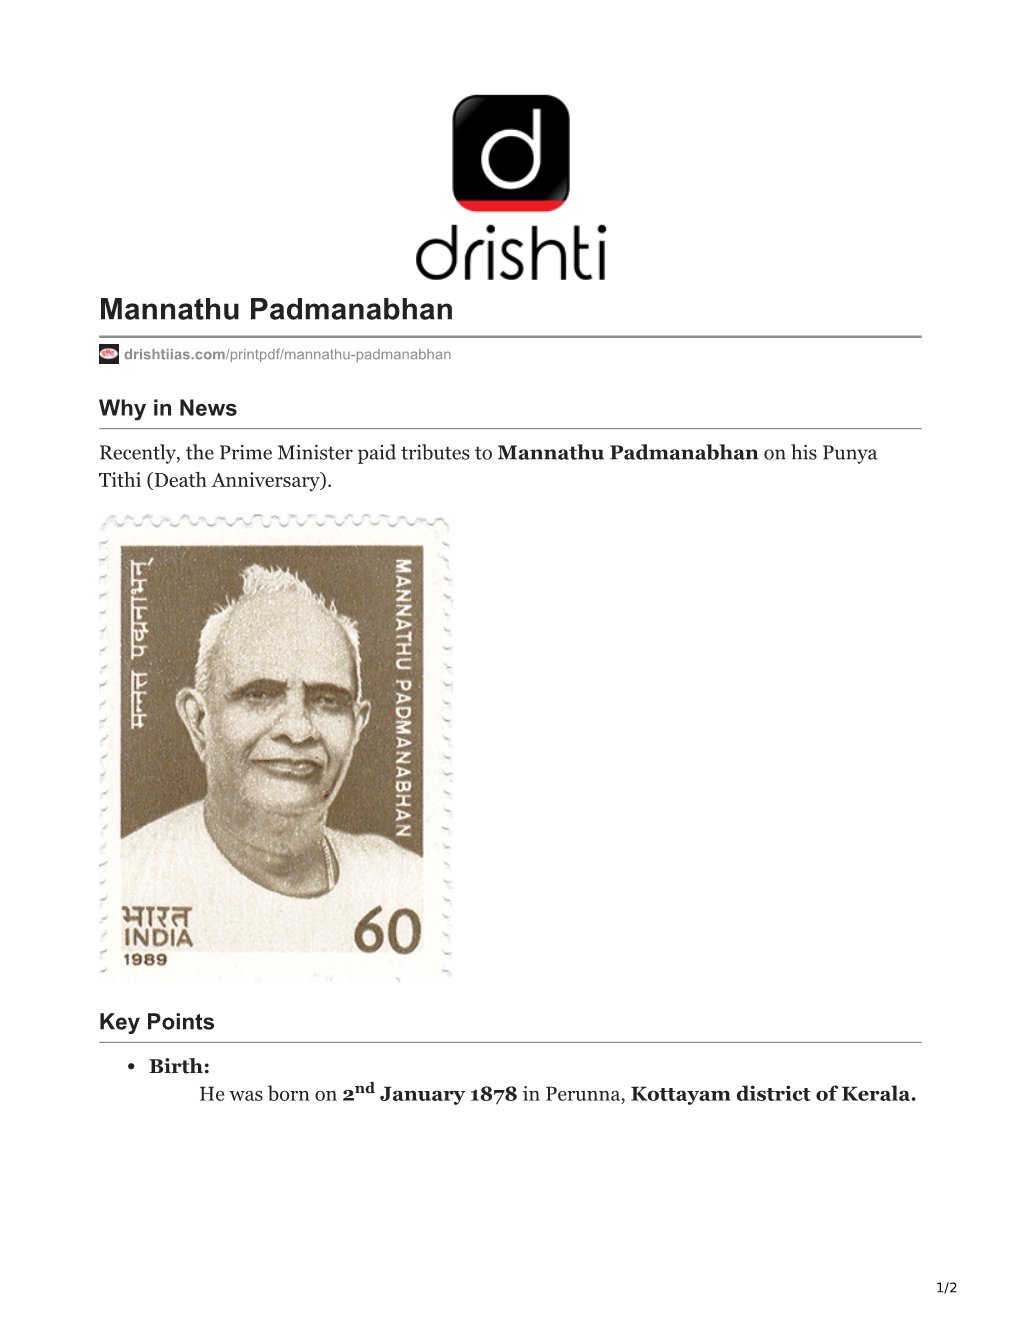 Mannathu Padmanabhan